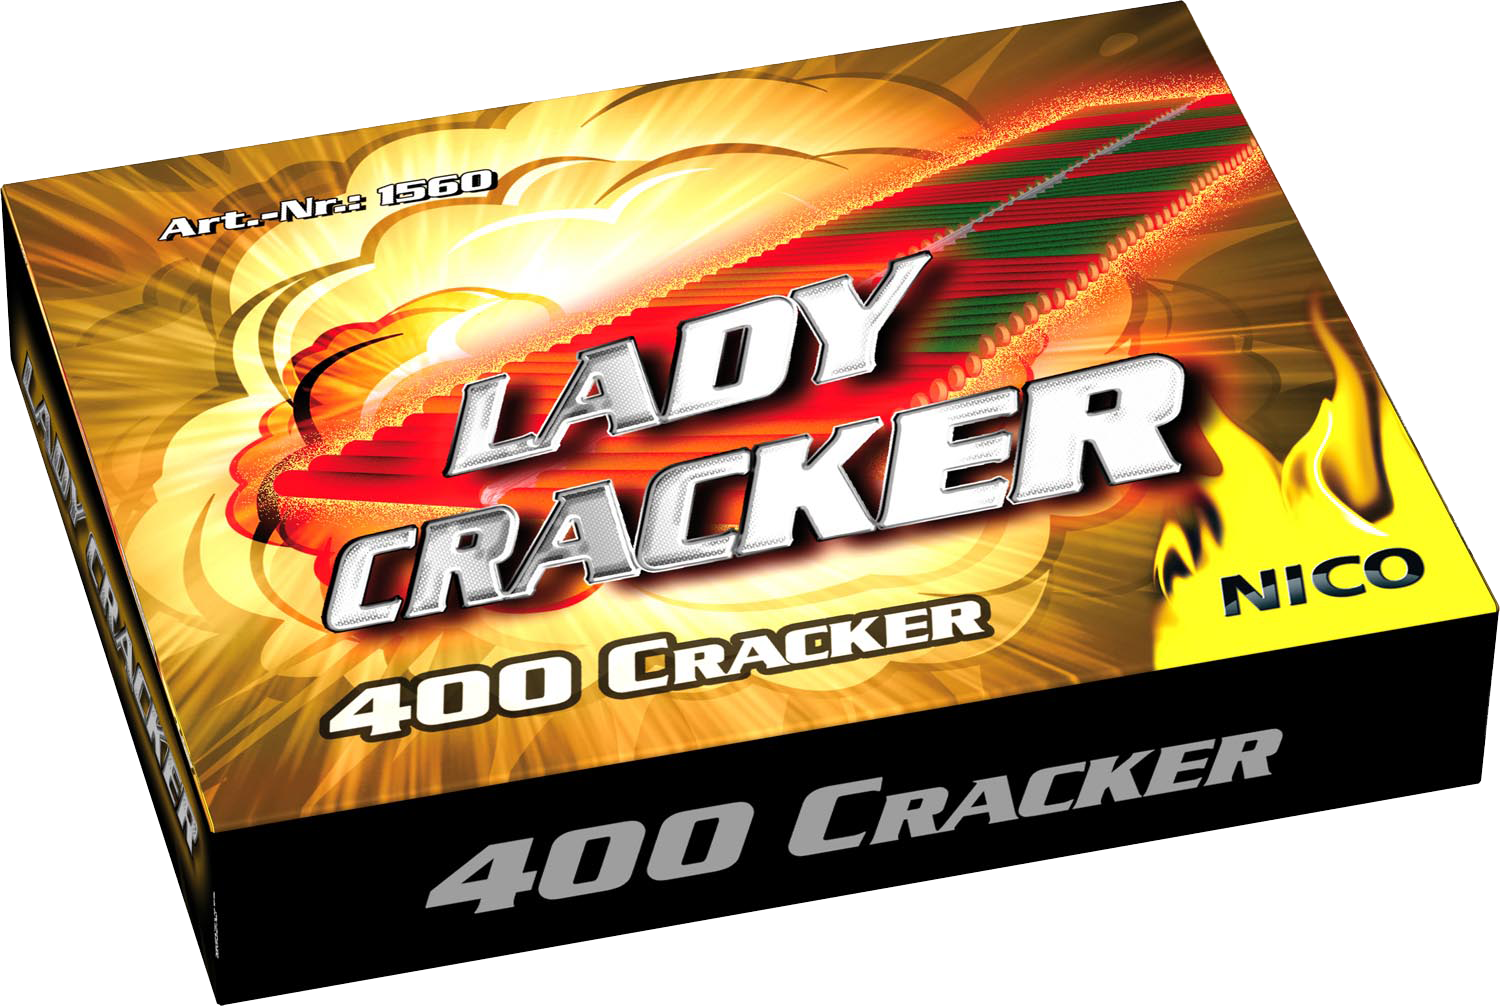 Nico Lady Cracker 400